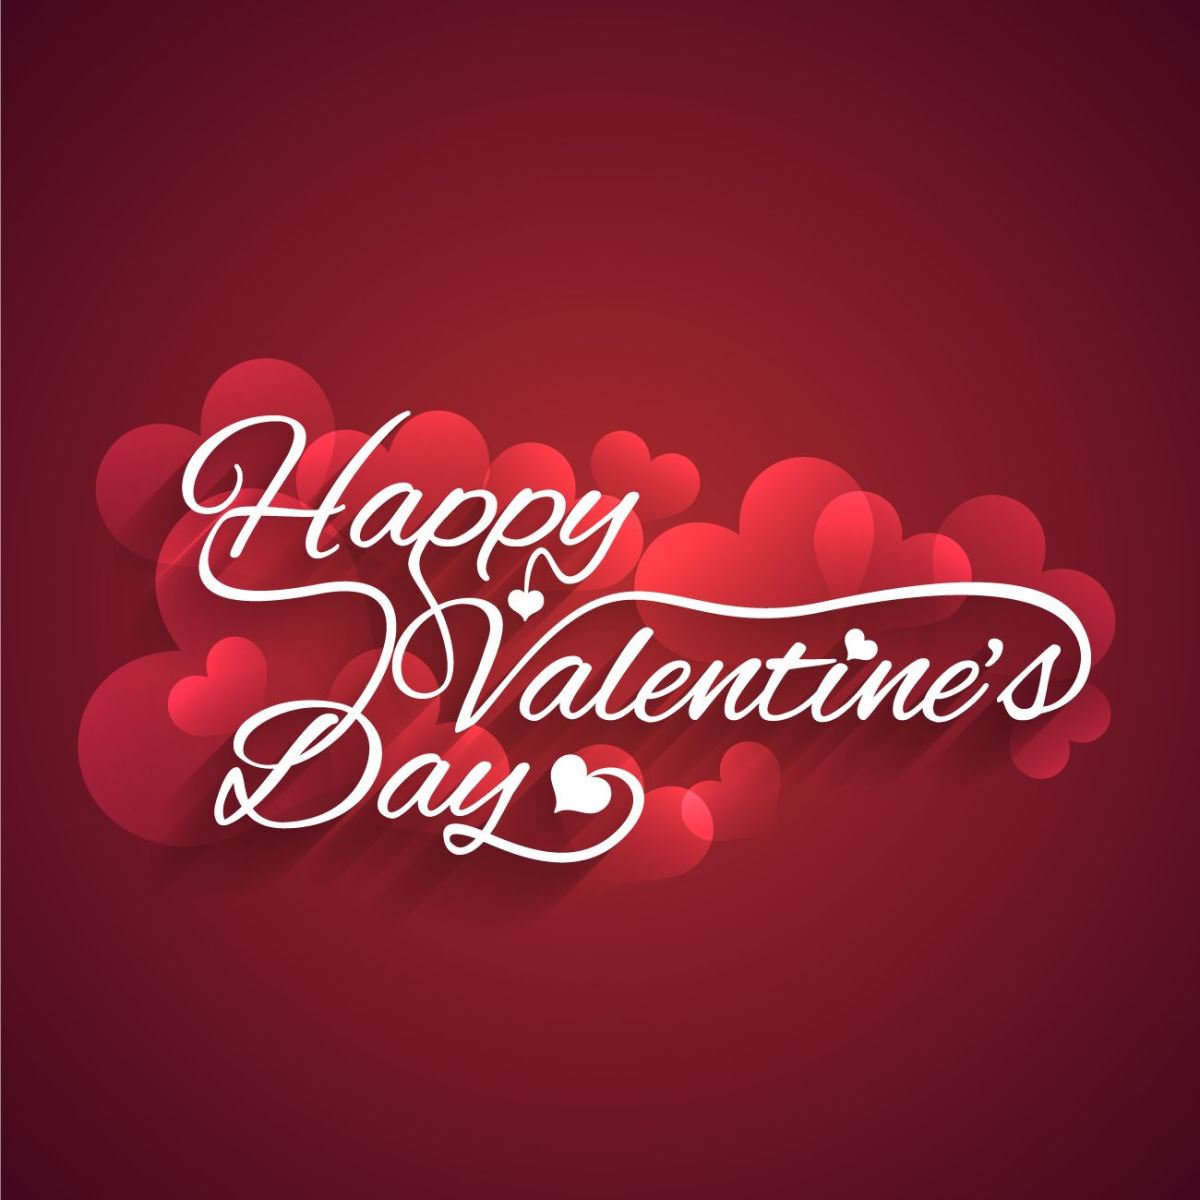 lời chúc Valentine, lời chúc valentine cho vợ, lời chúc Valentine hay nhất, loi chuc valentine, lời chúc Valentine ý nghĩa nhất, chúc Valentine tiếng anh, Valentine day